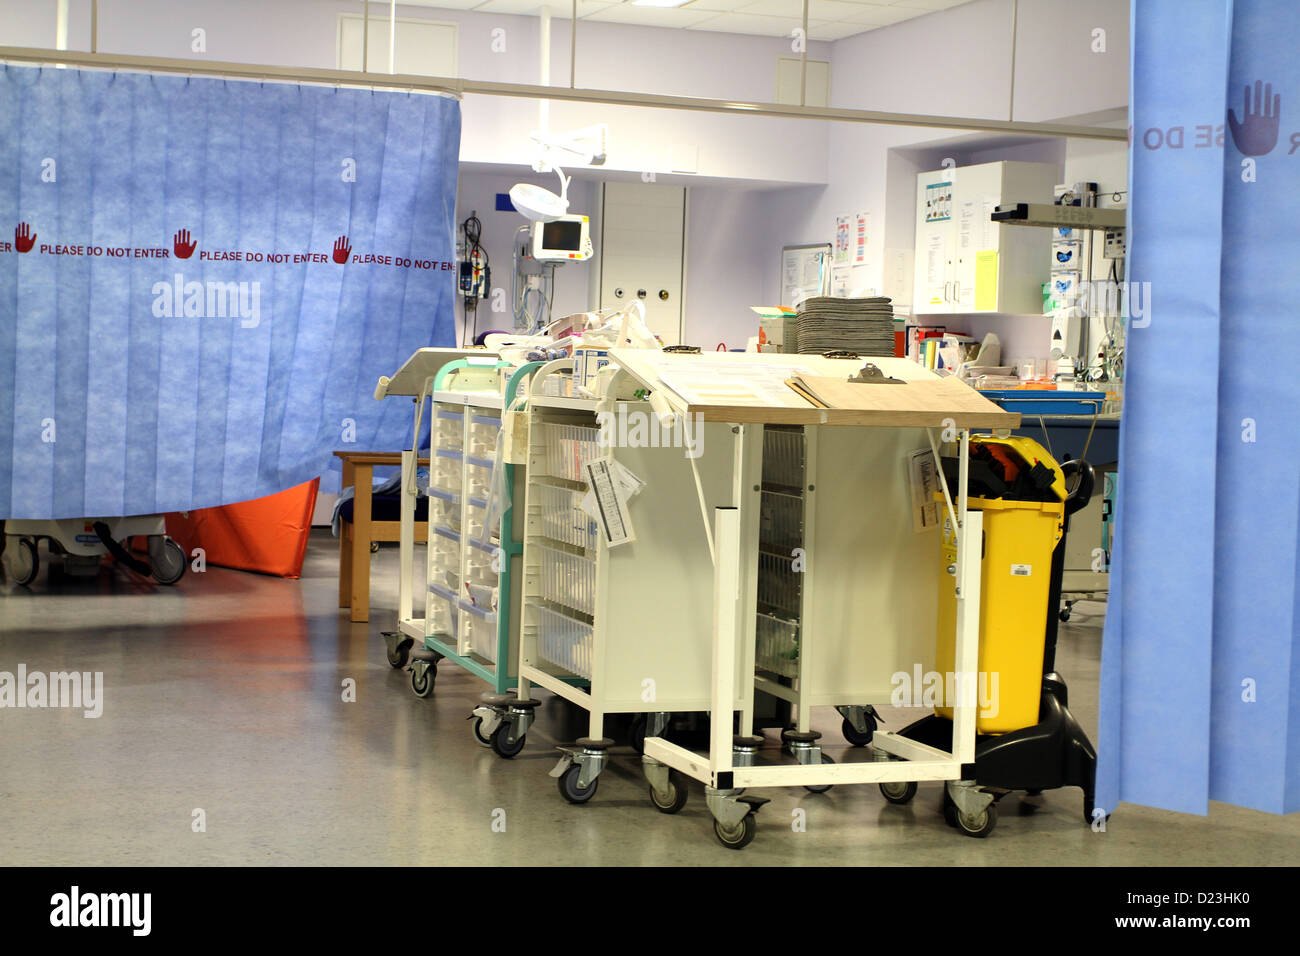 January 2013 - British Hospital ward work station Stock Photo